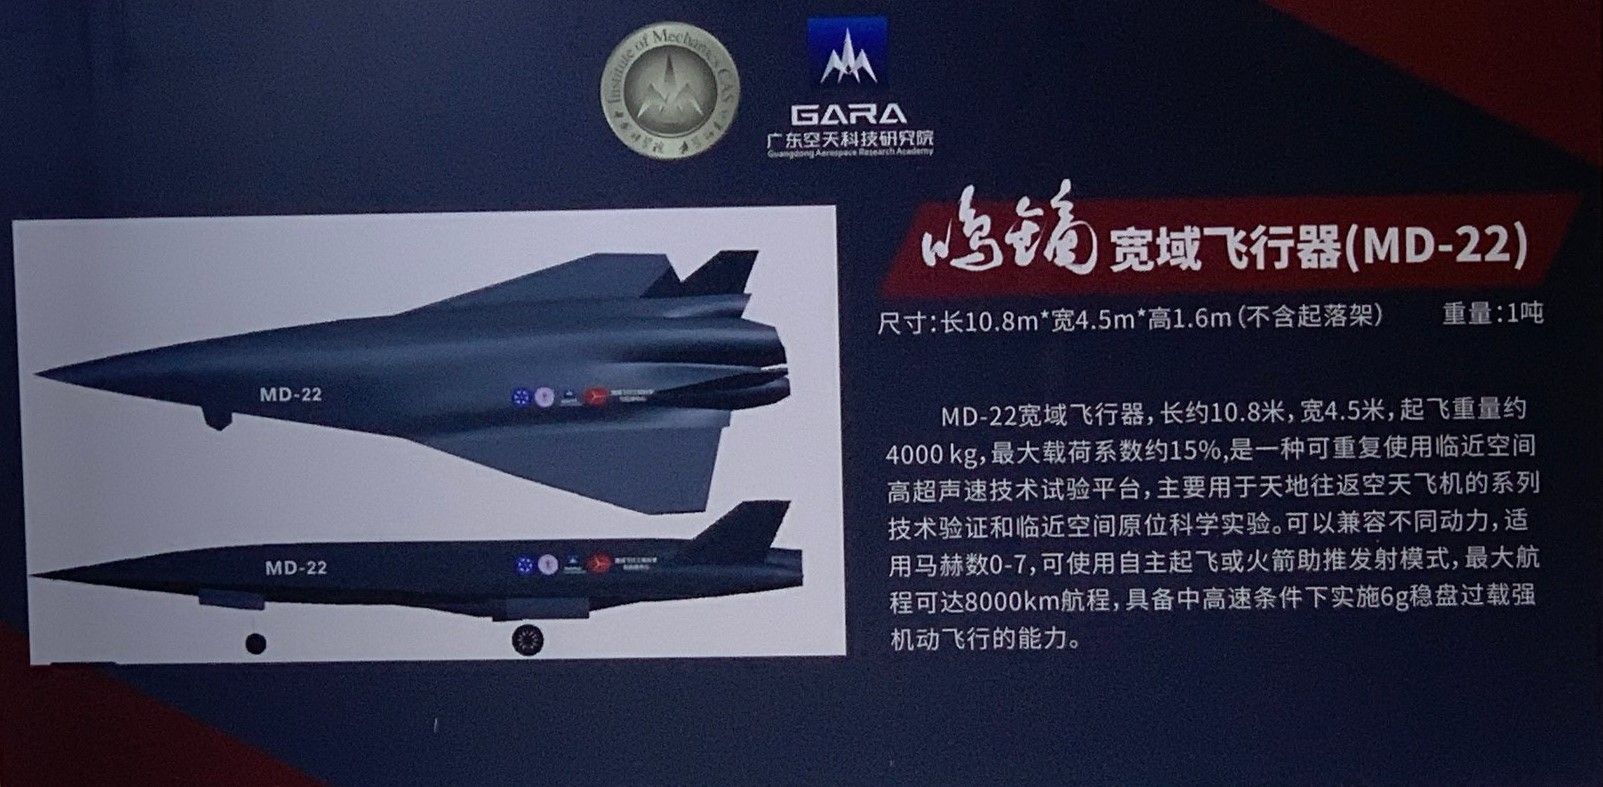 China Displays Mach 7 hypersonic UAV